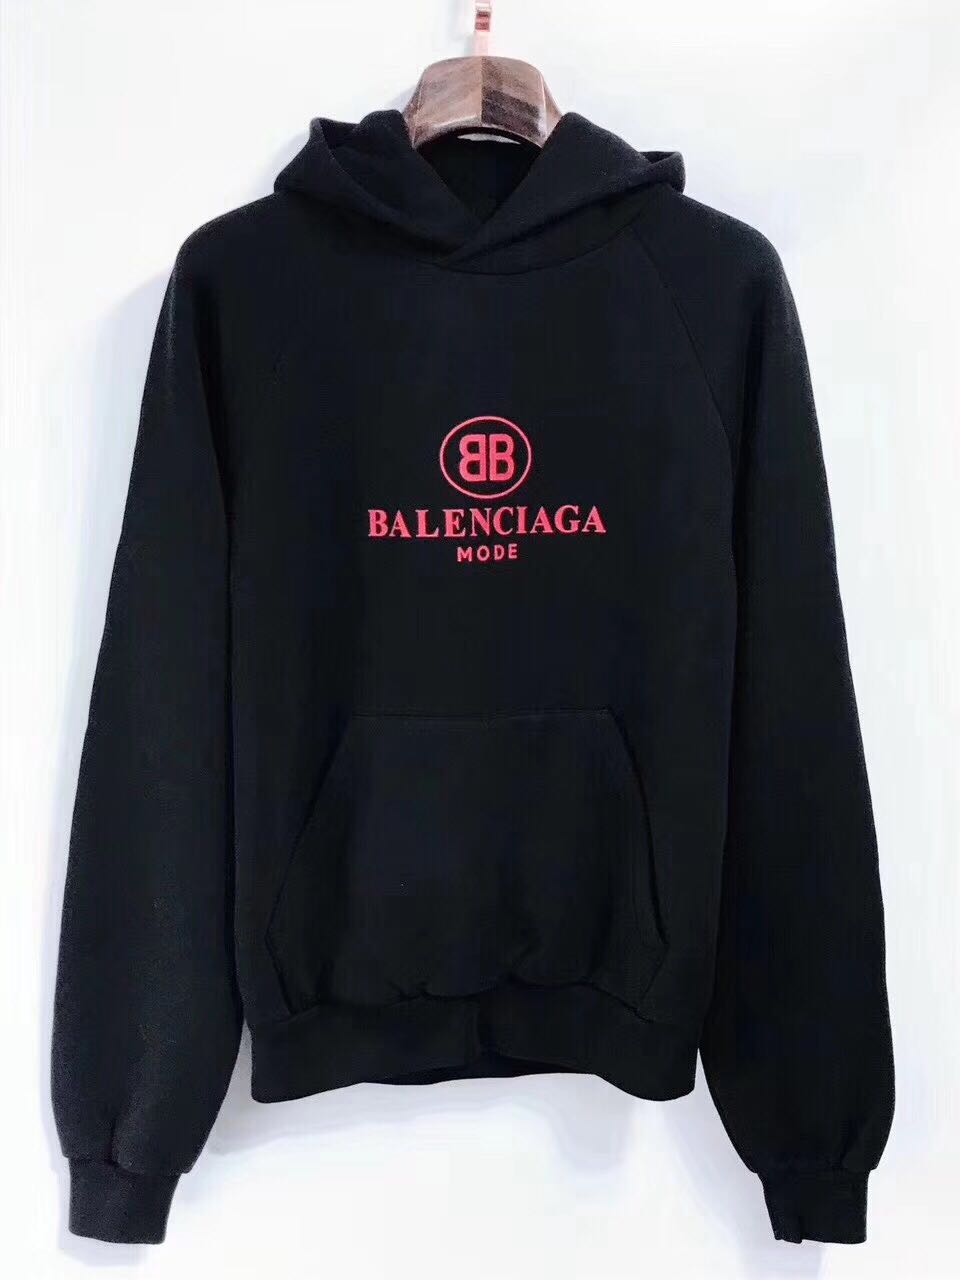 bb mode hoodie